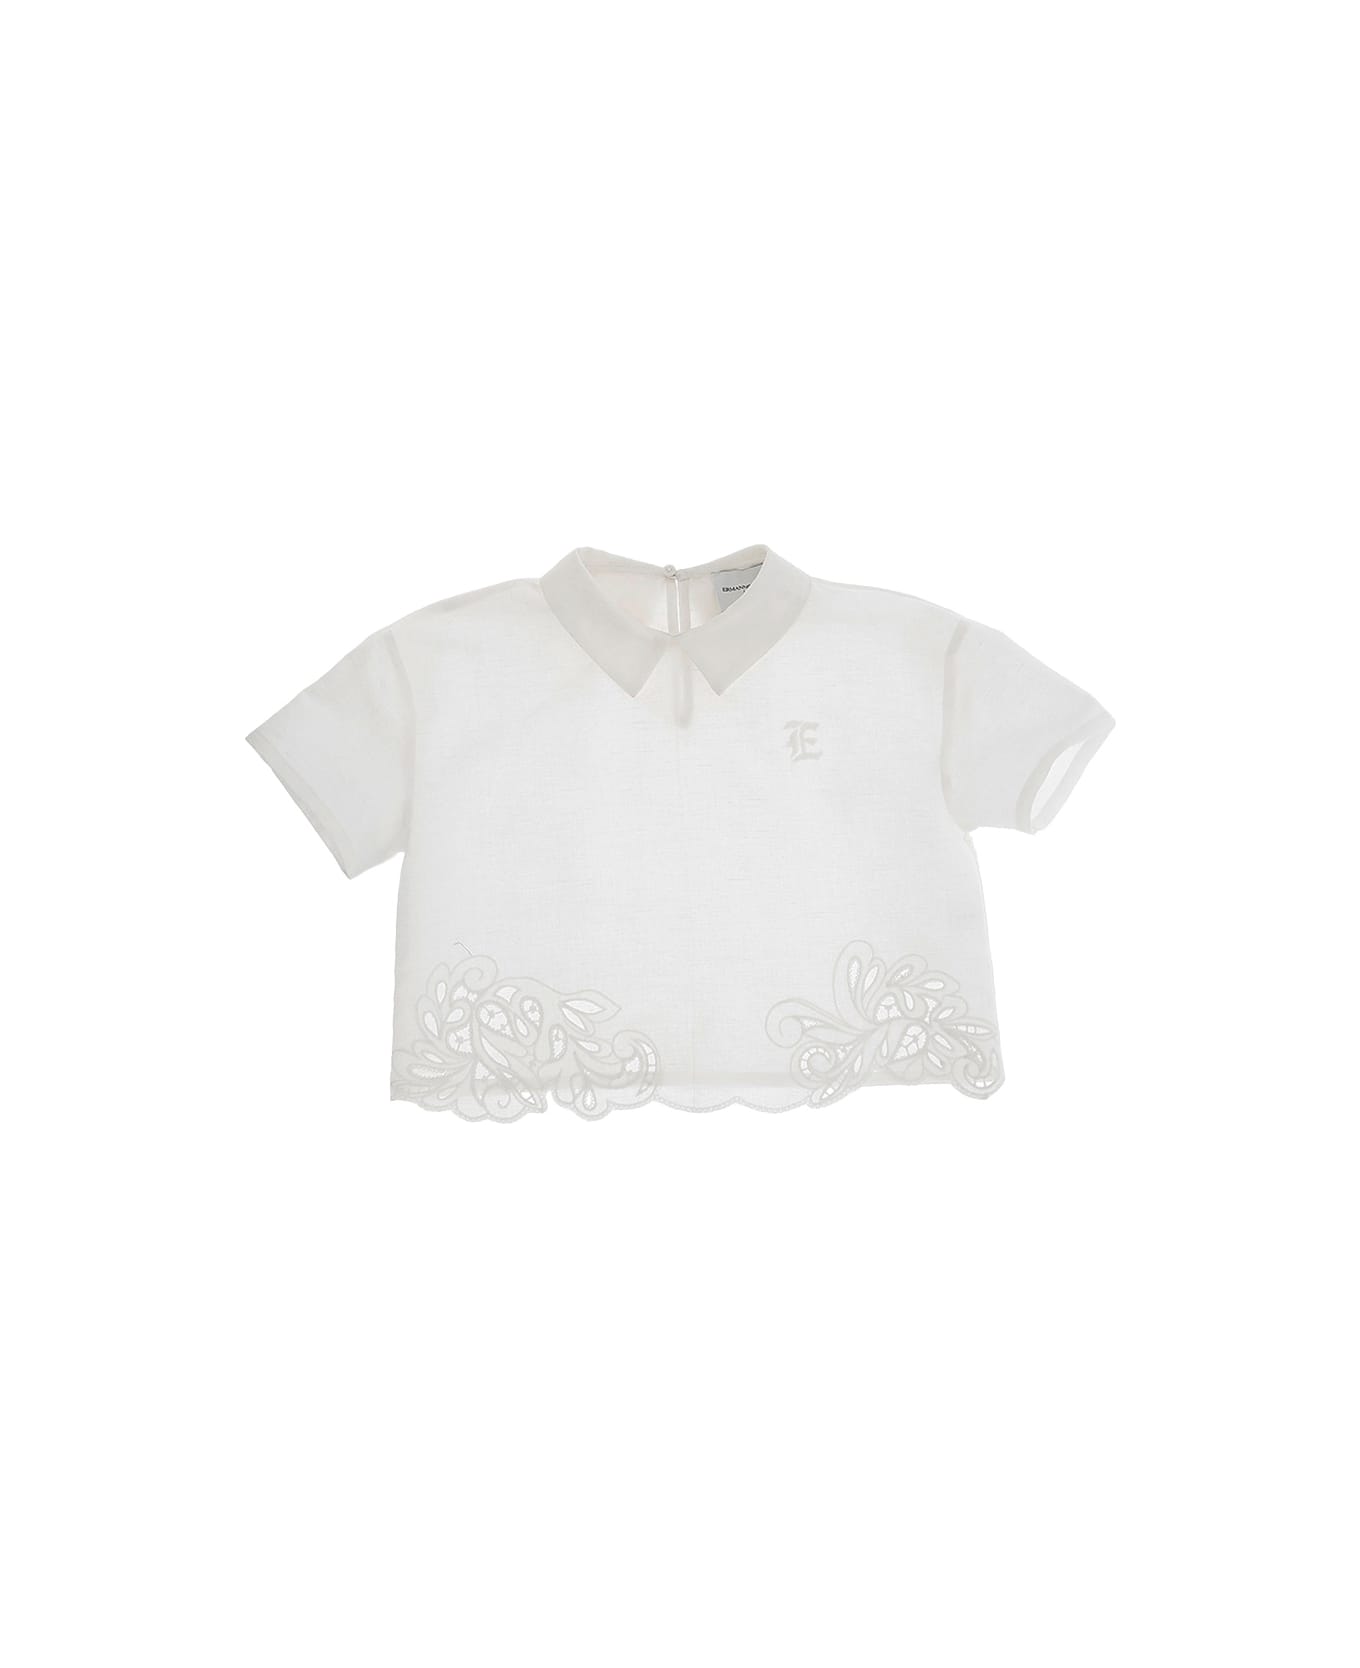 Ermanno Scervino Junior White Top With Embroidery - White トップス